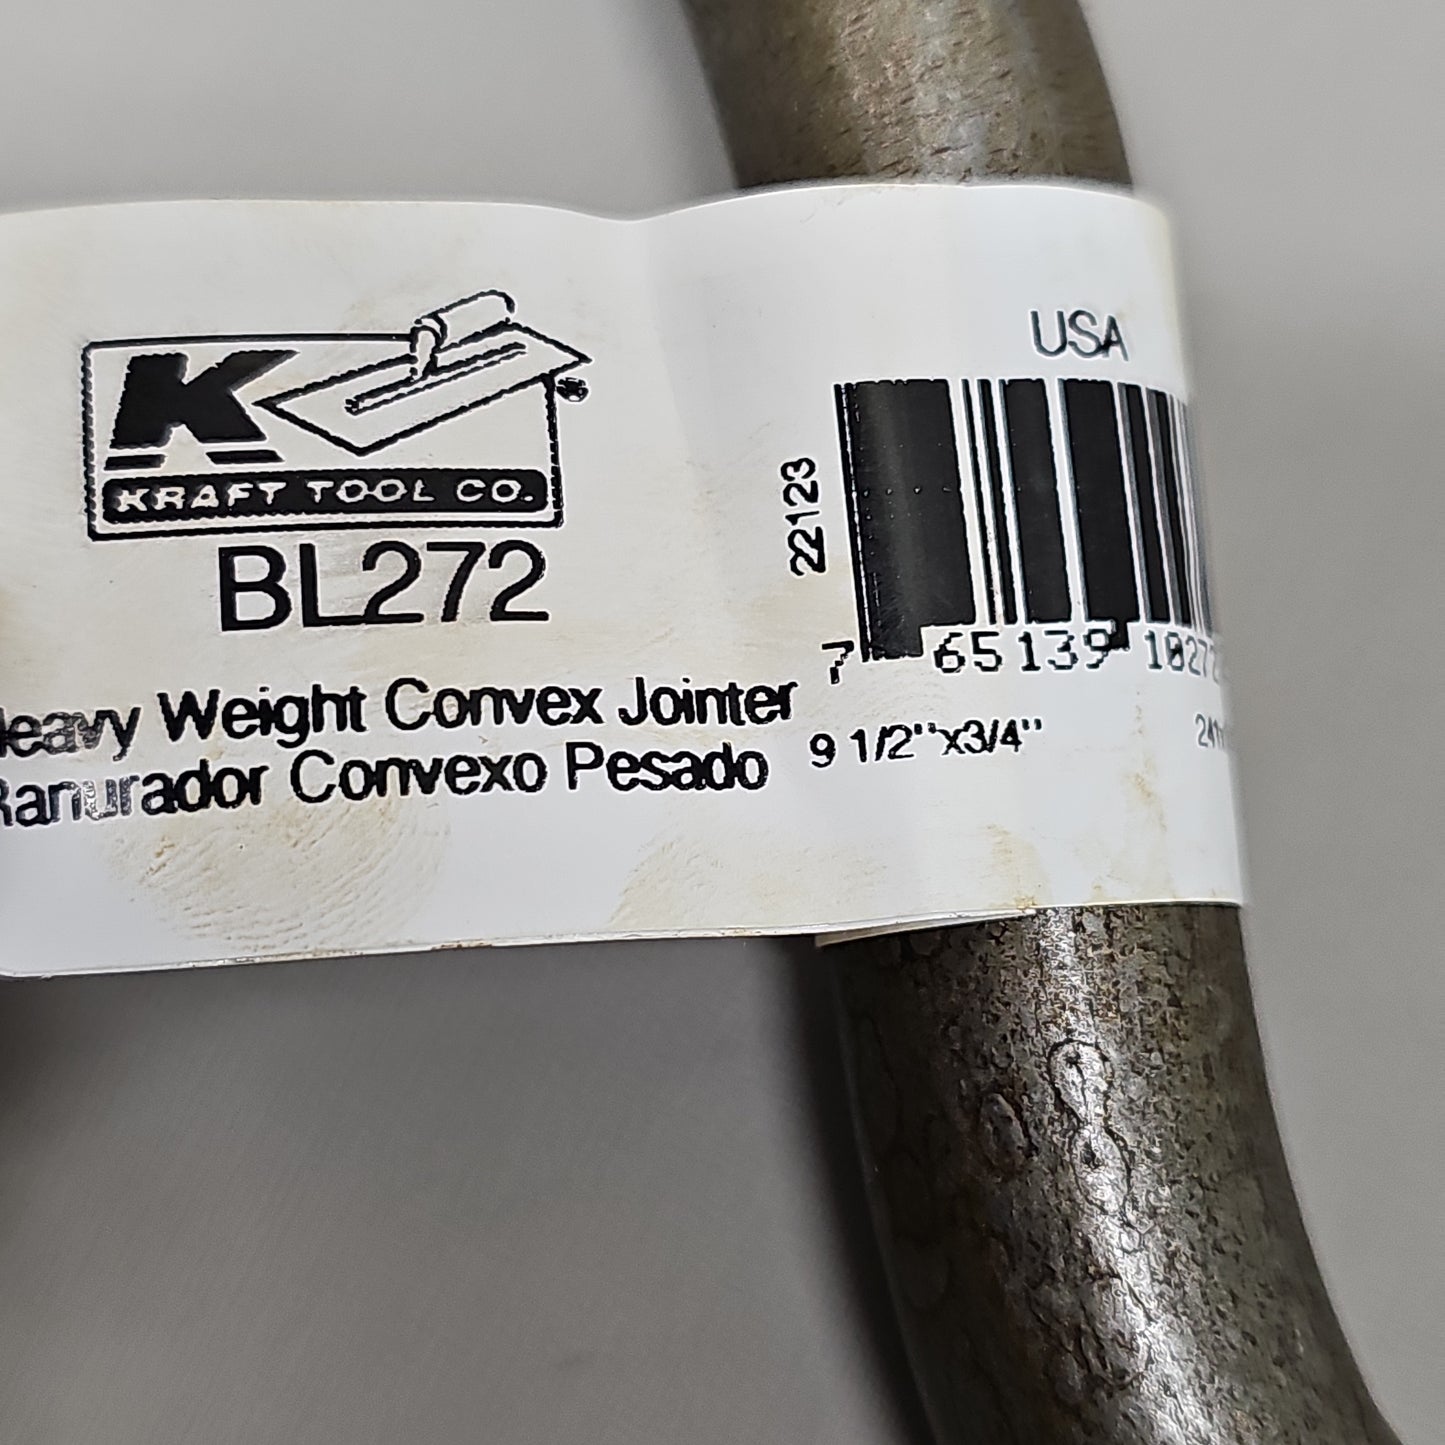 KRAFT TOOL CO Heavyweight Convex Jointer 9-1/2" x 3/4" BL272 (New)